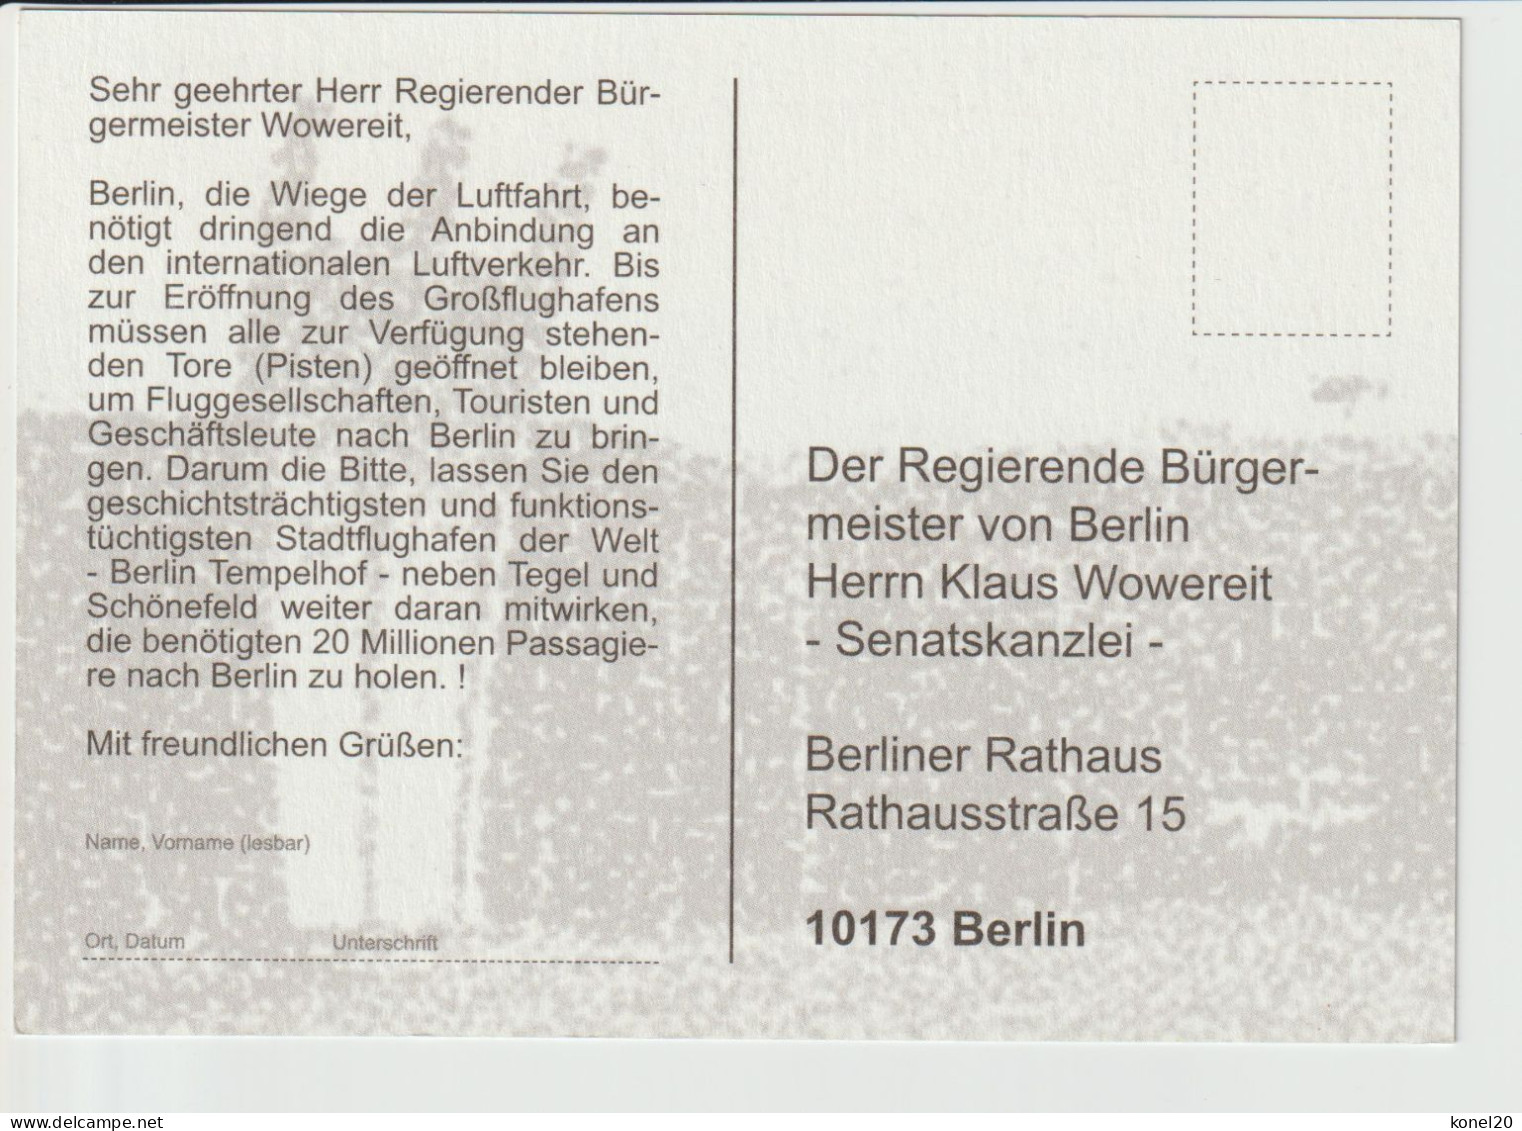 Pc To The Mayor Of Berlin To Keep Open Berlin Airport Tempelhof - 1919-1938: Interbellum